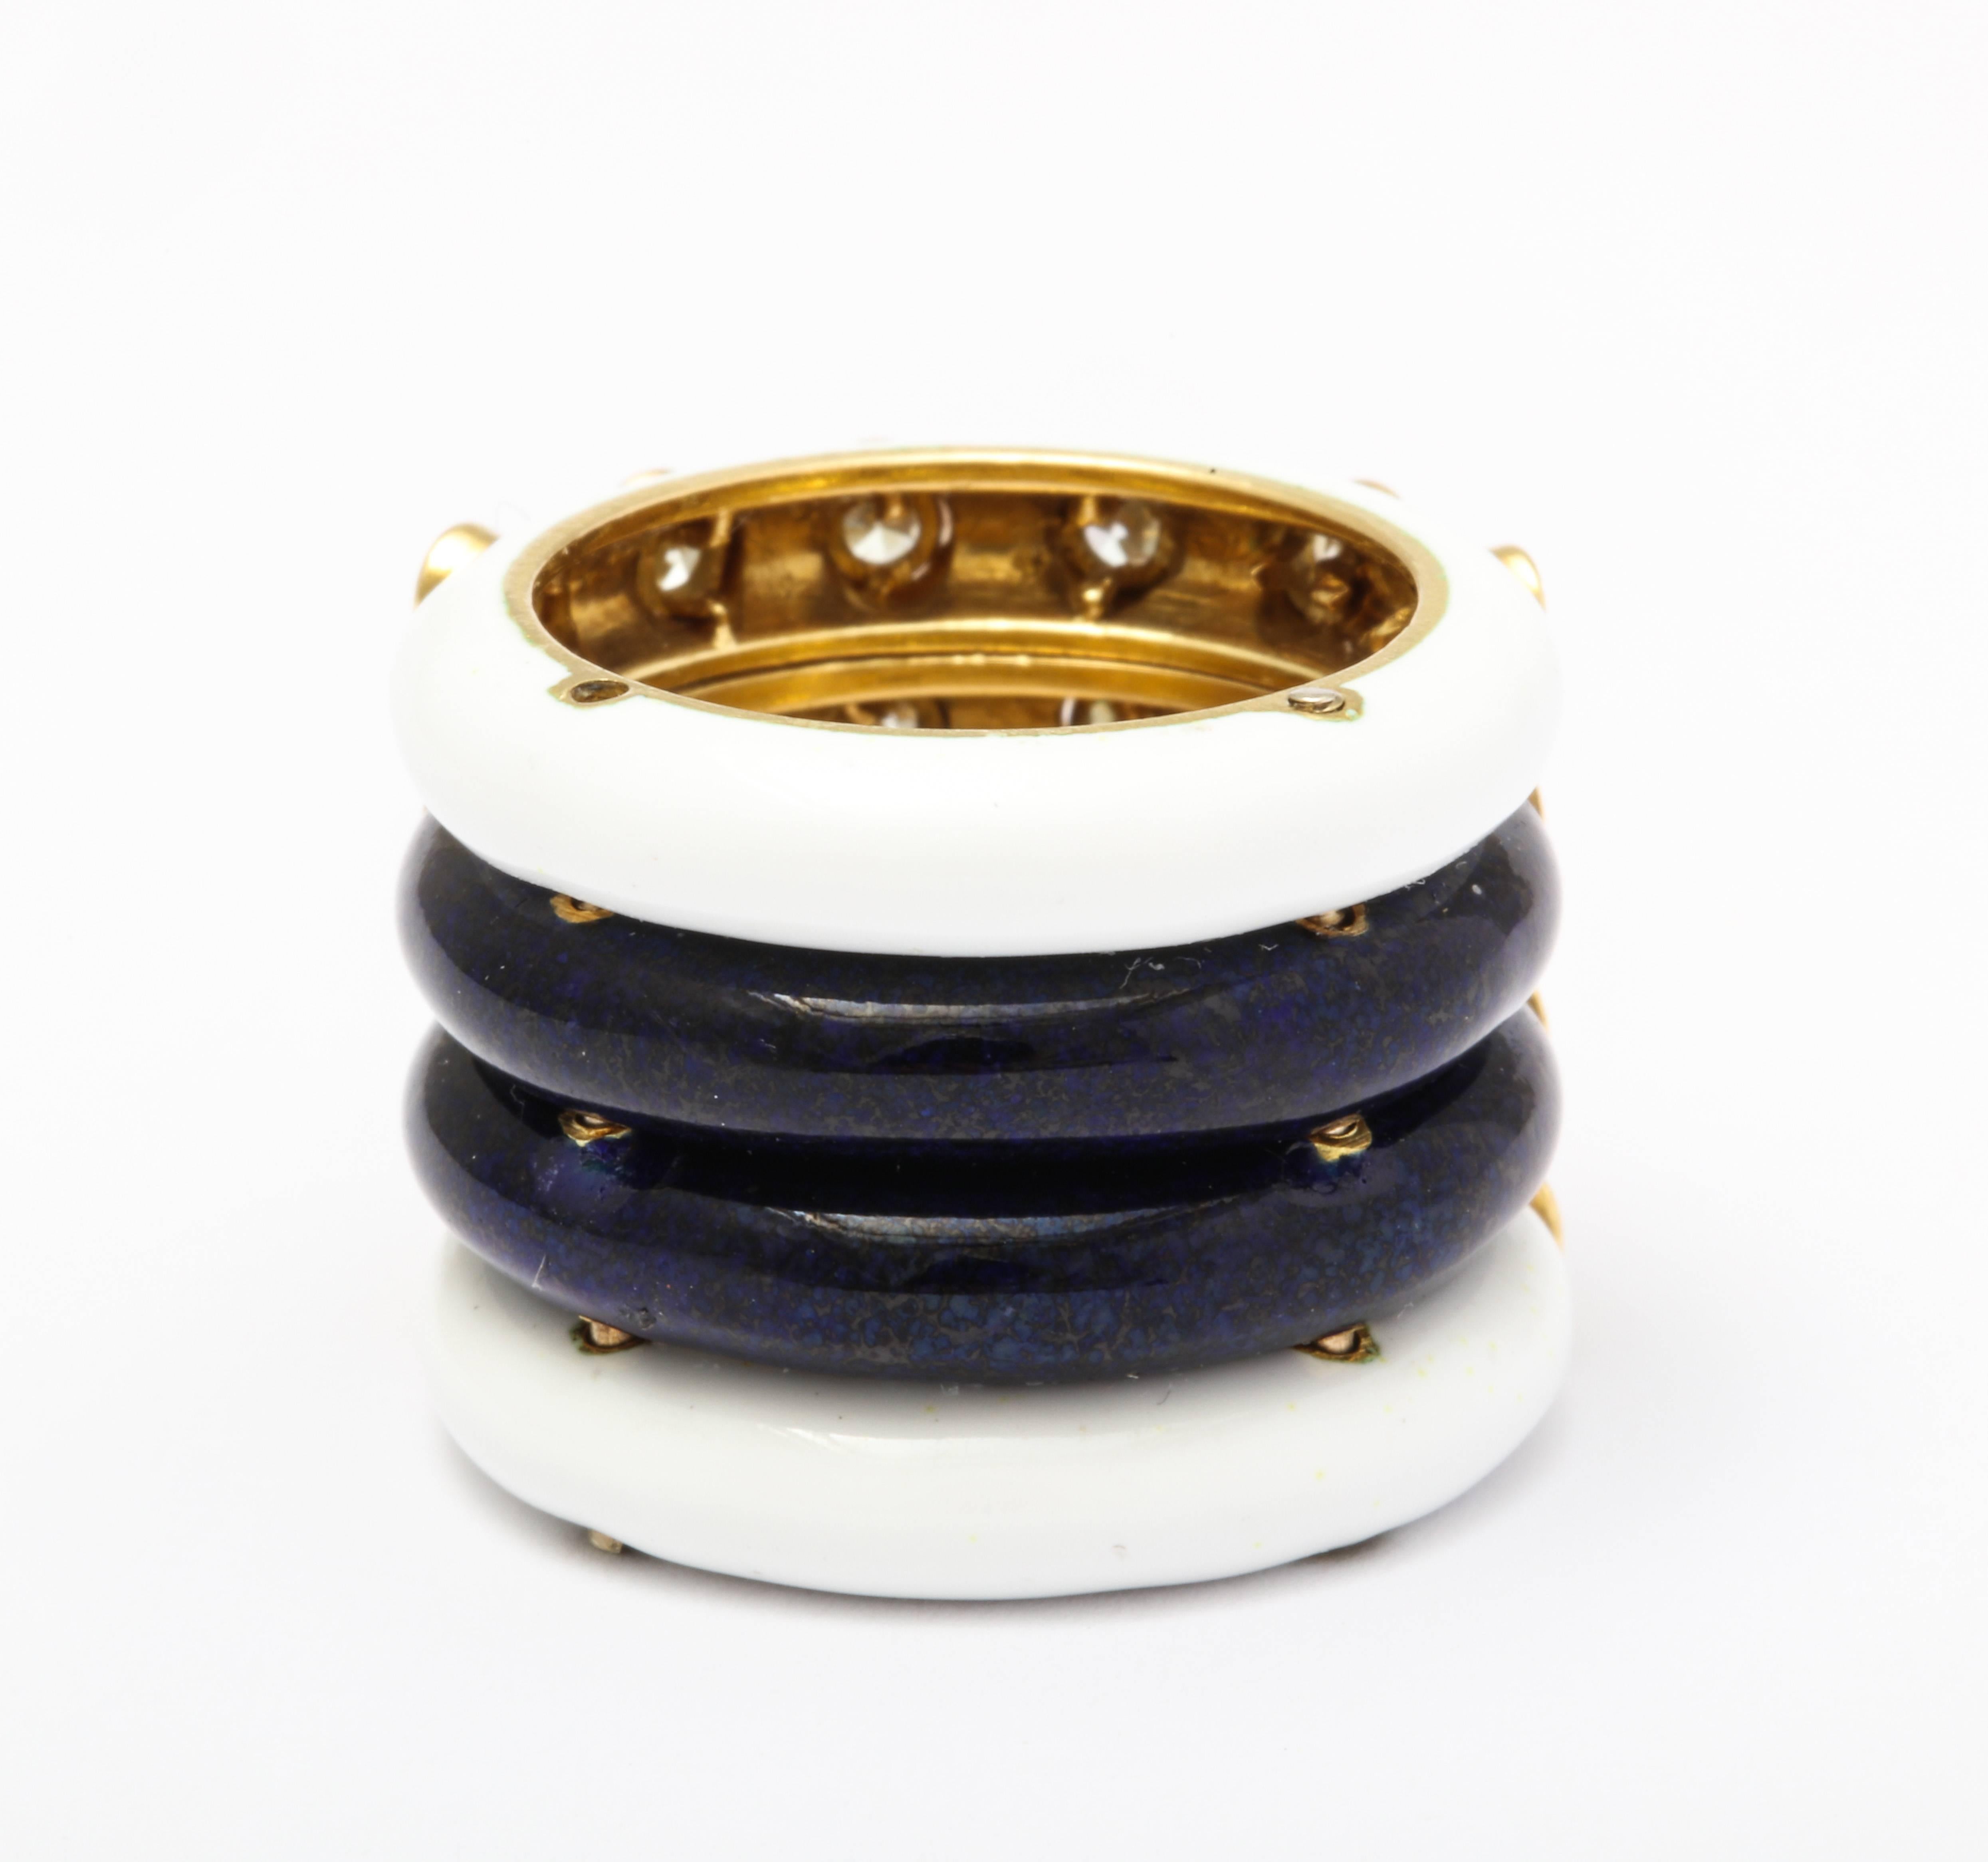 Enamel and Diamond Ring by Christian Dior

18 karat gold